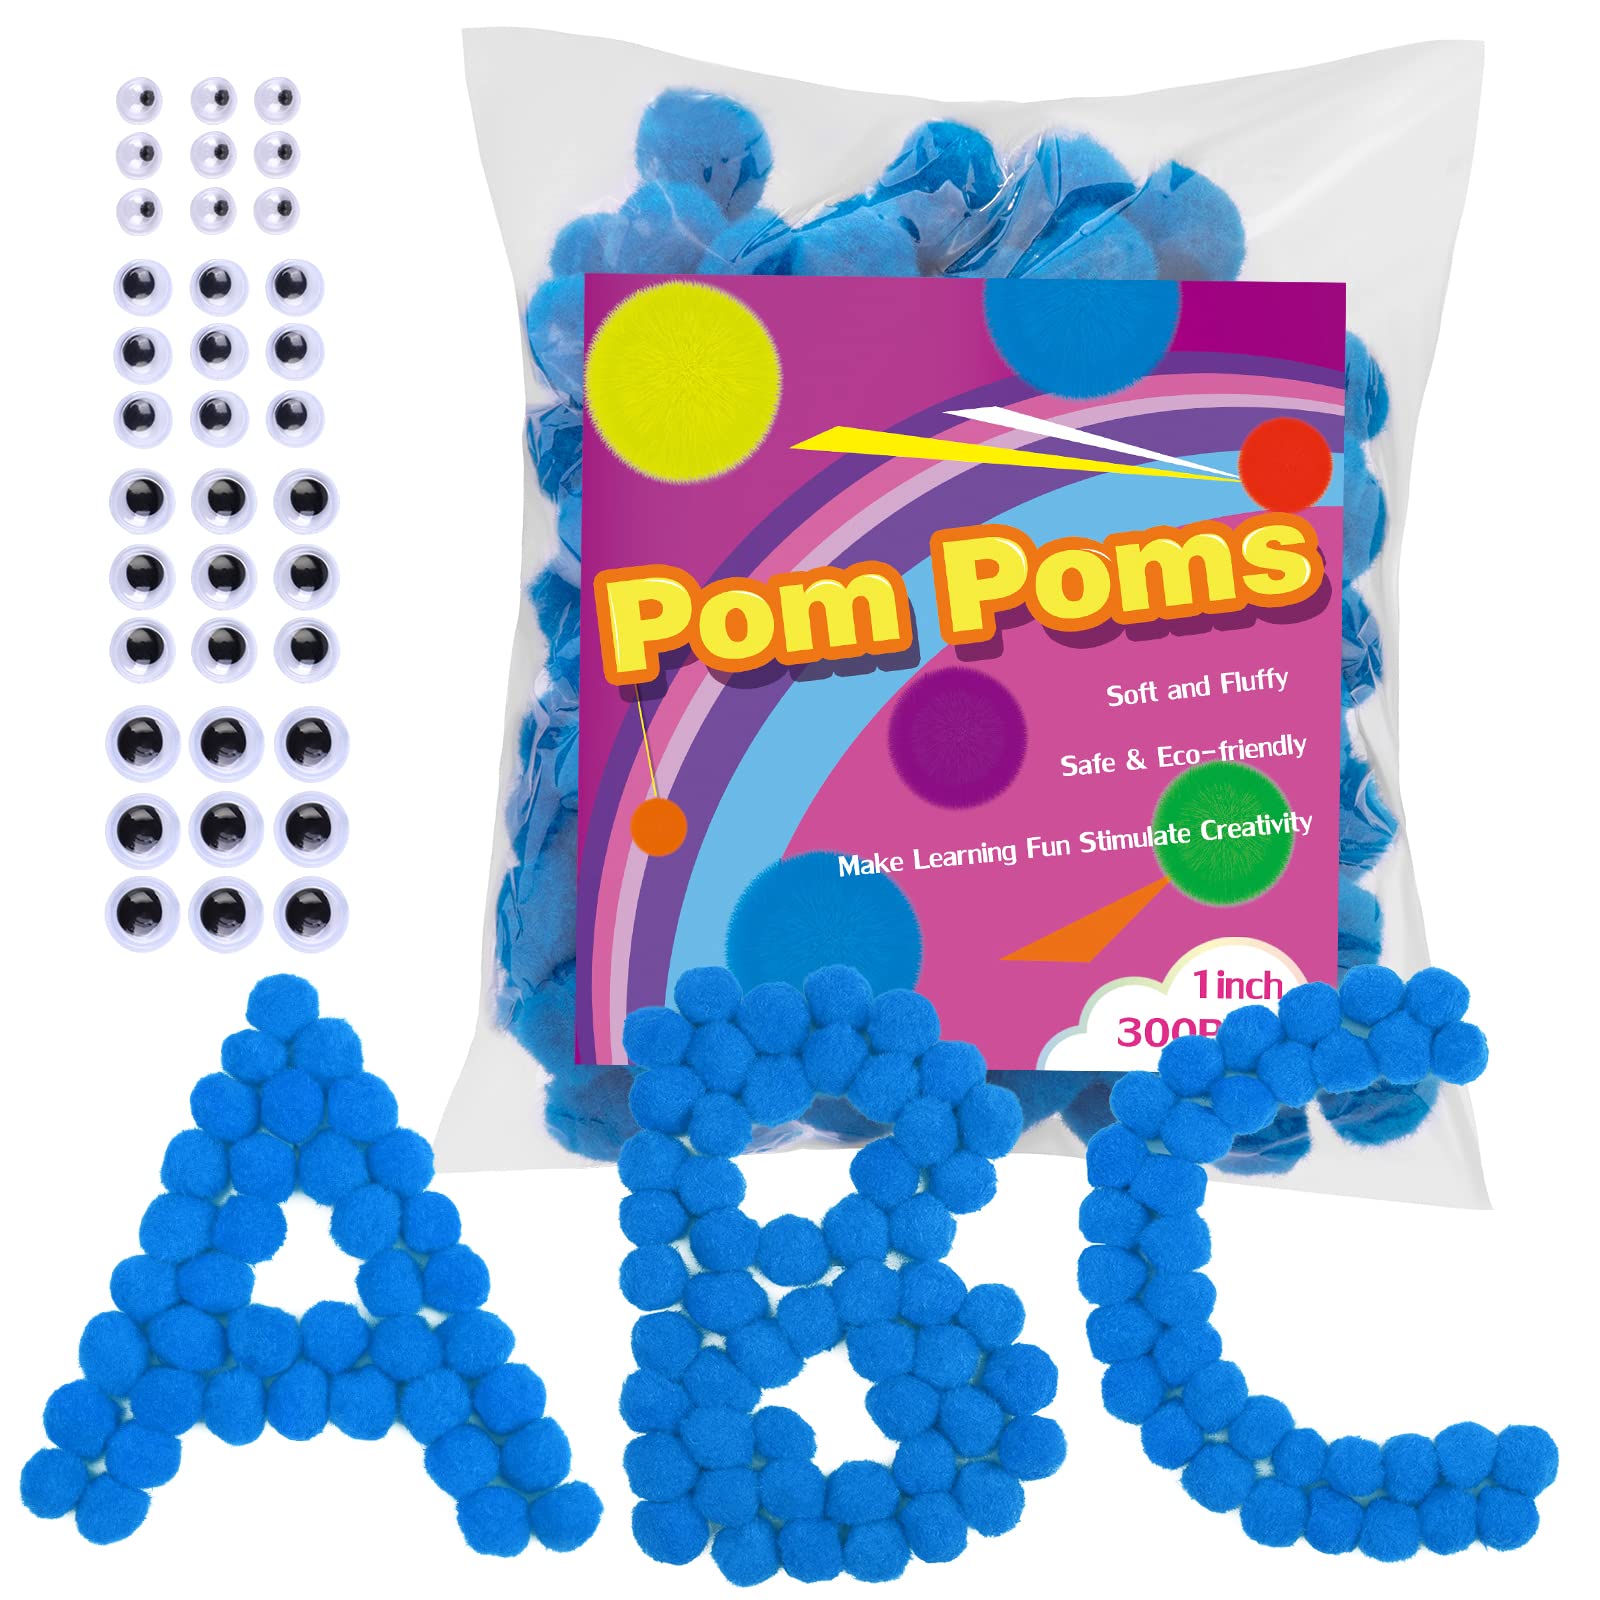 300 Pieces Light Blue Pom Poms 1 Inch Pom Poms with Self-Adhesive